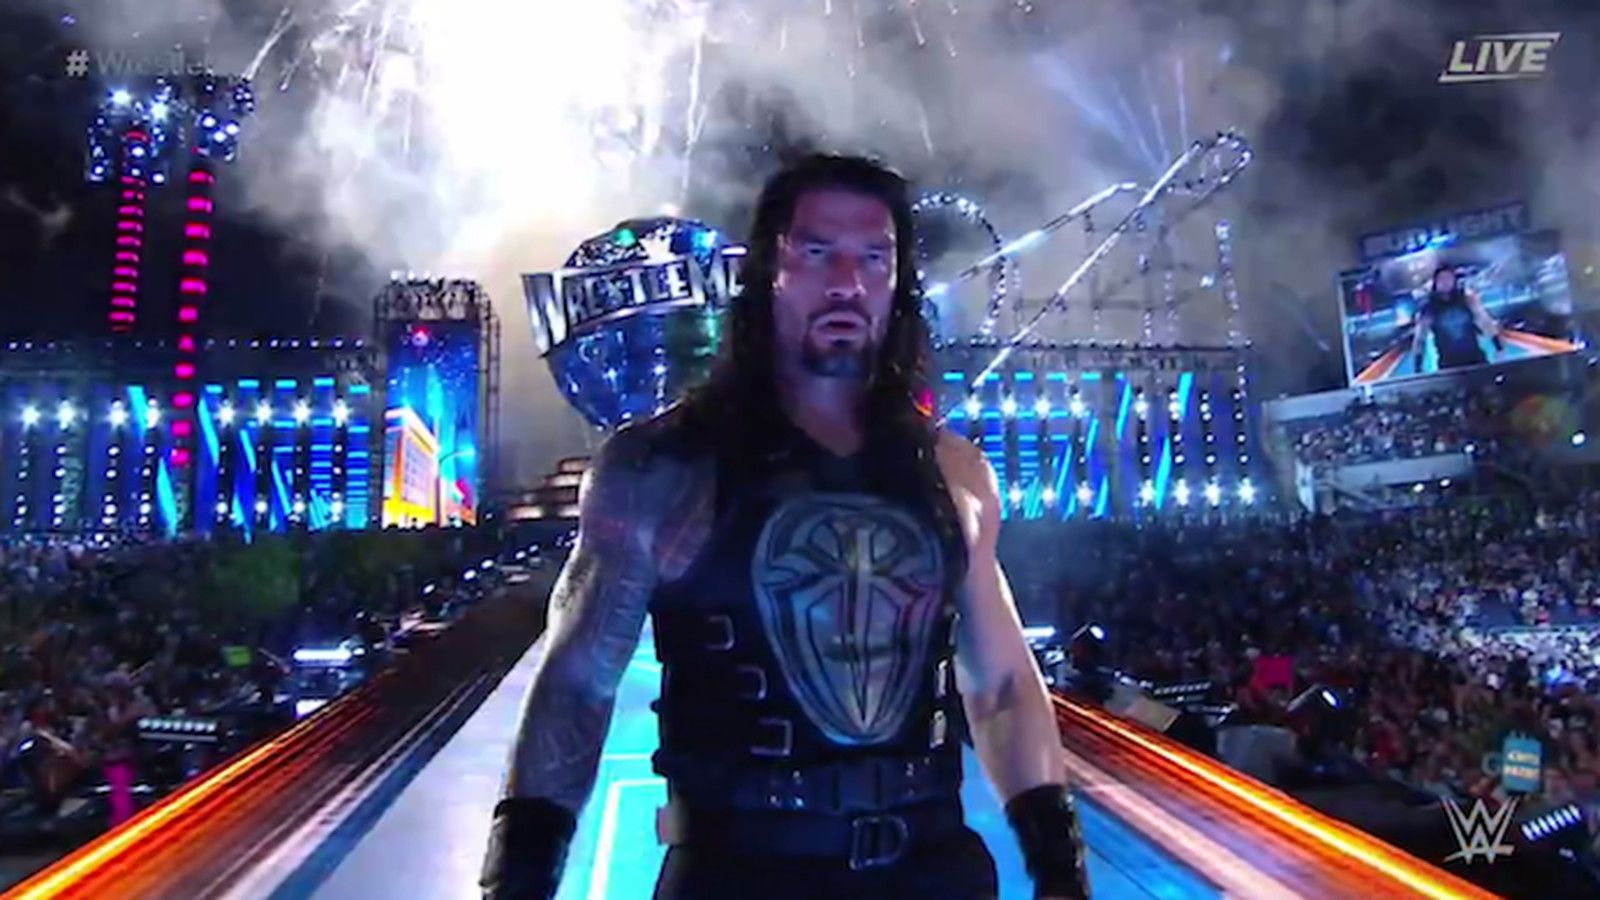 WrestleMania 33 results: Roman Reigns pins Undertaker in main